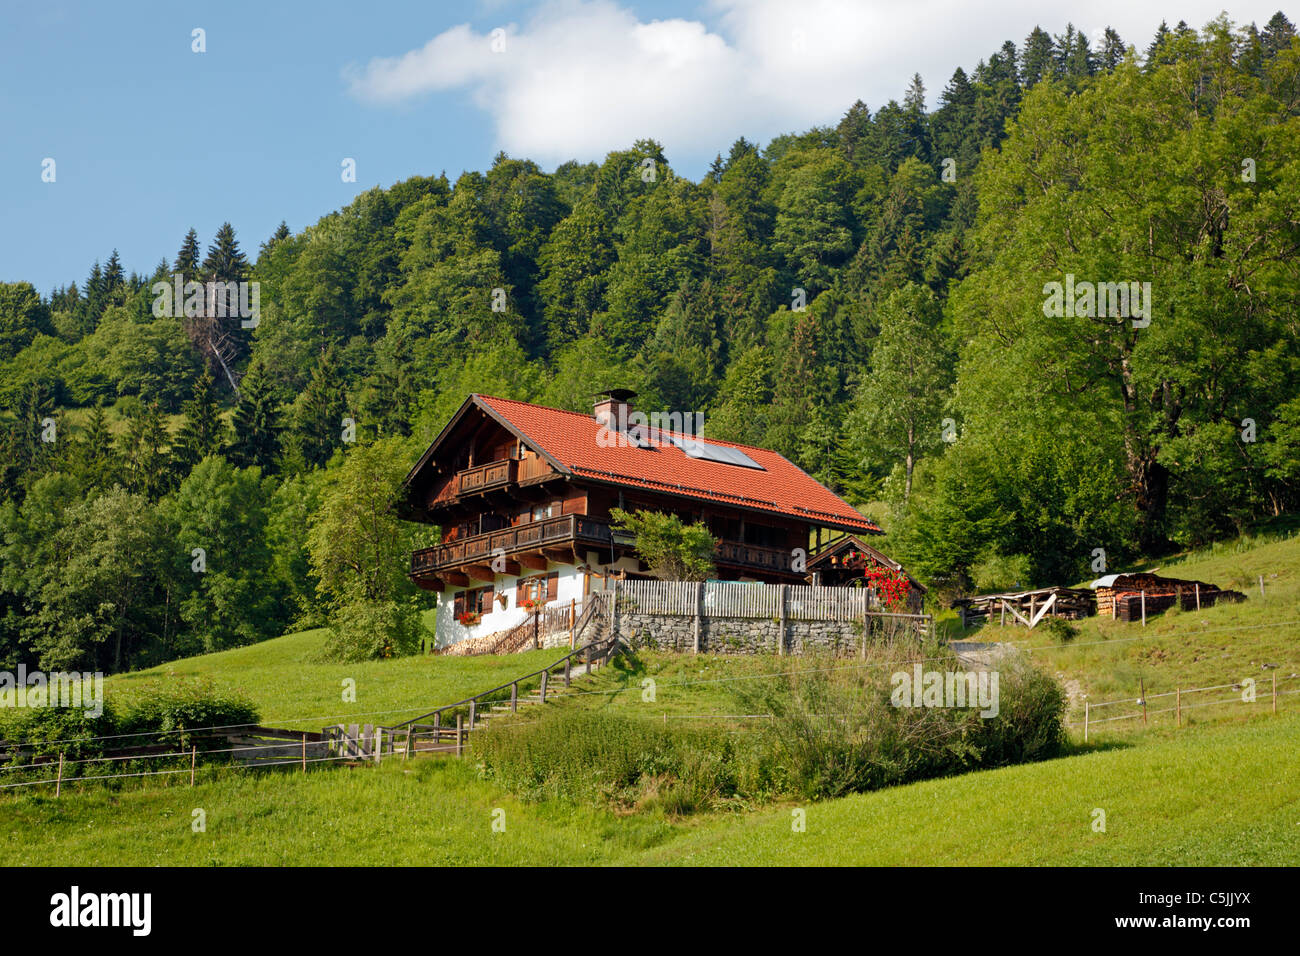 Alpine house with solar heating panels in the roof in the mountains near Partnachklamm in Garmisch-Partenkirchen, Germany Stock Photo